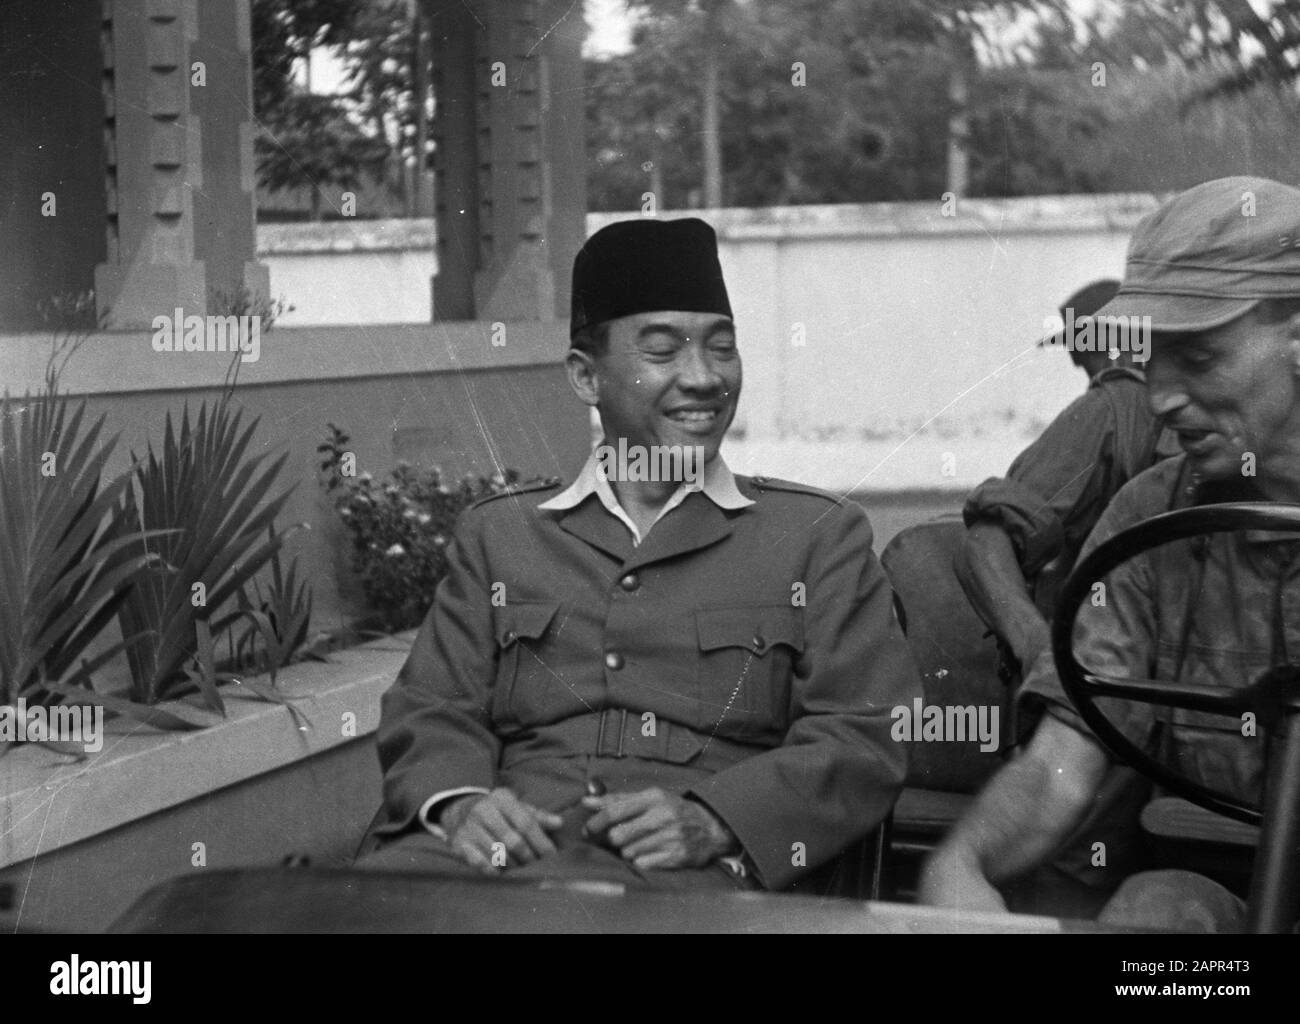 Ir Soekarno High Resolution Stock Photography and Images - Alamy